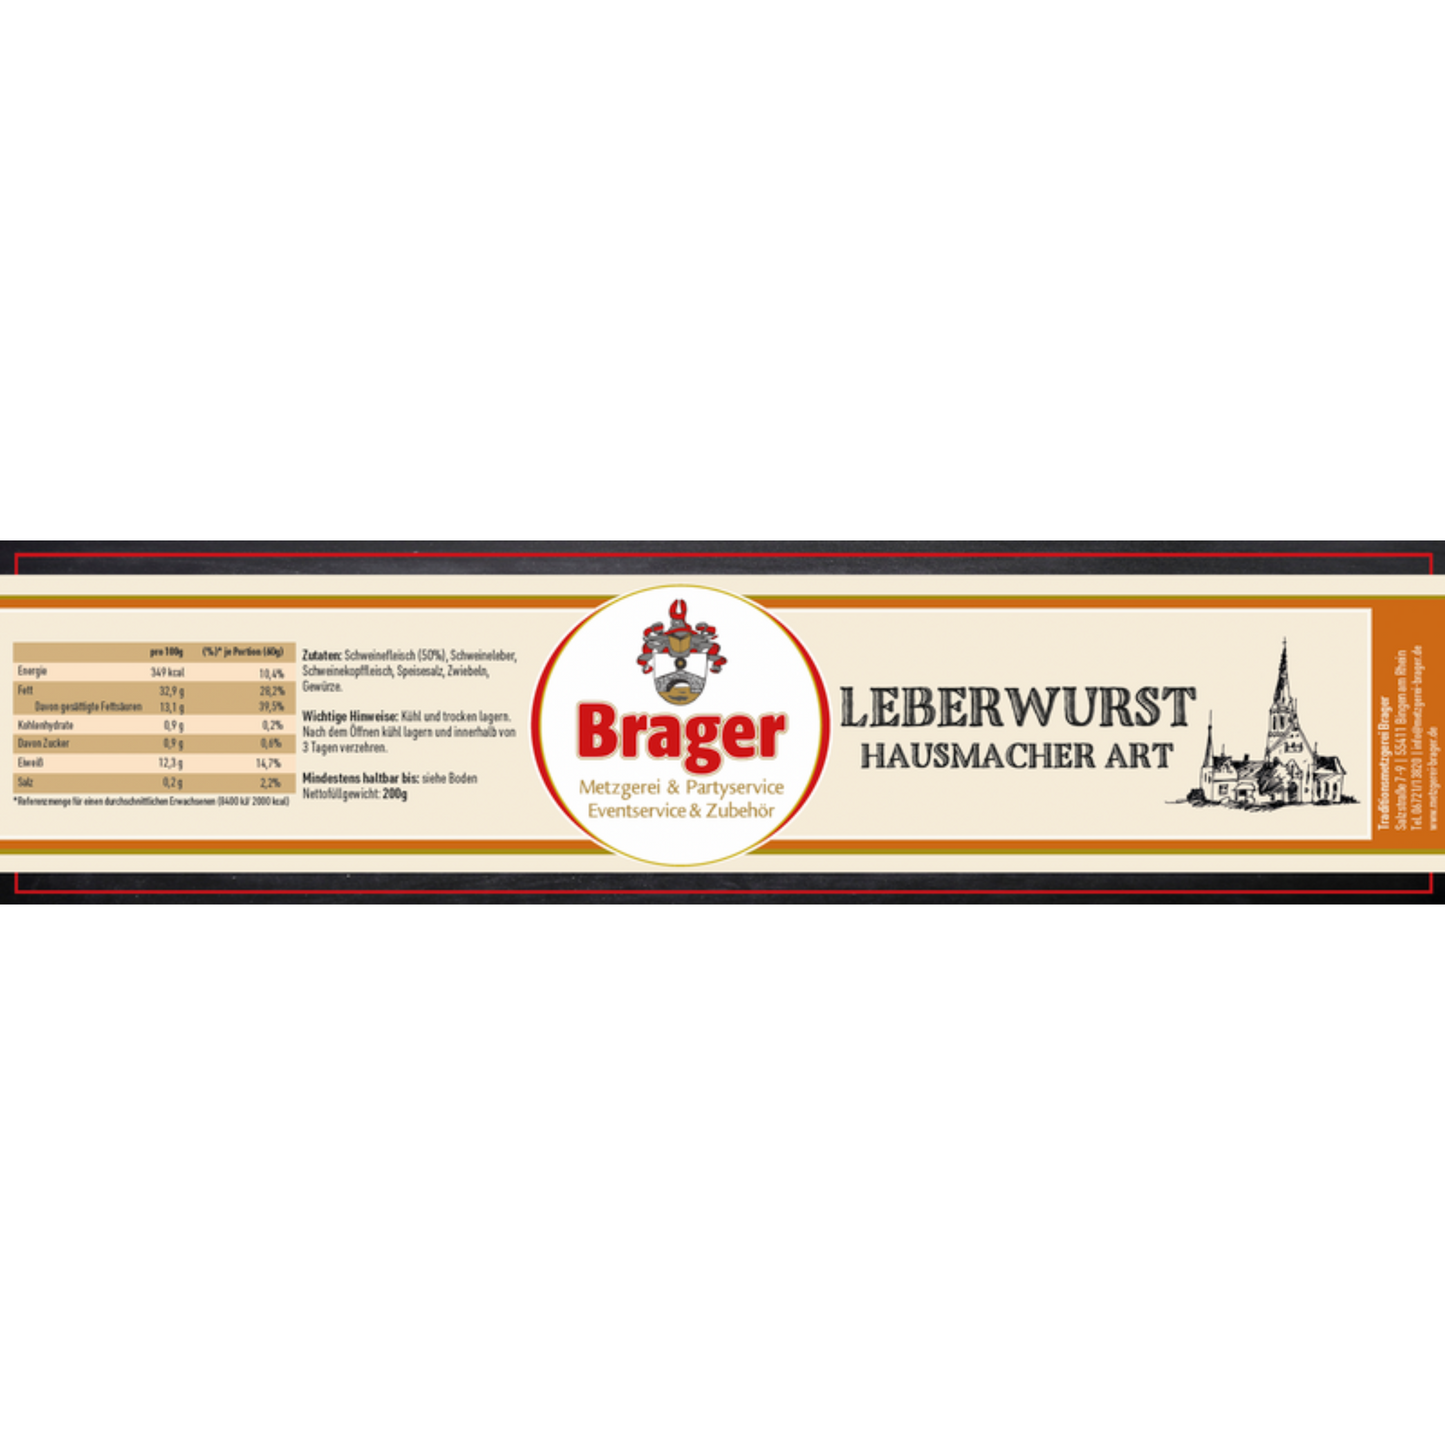 Hildegard Bundle (Leberwurst, Bratwurst & Blutwurst)